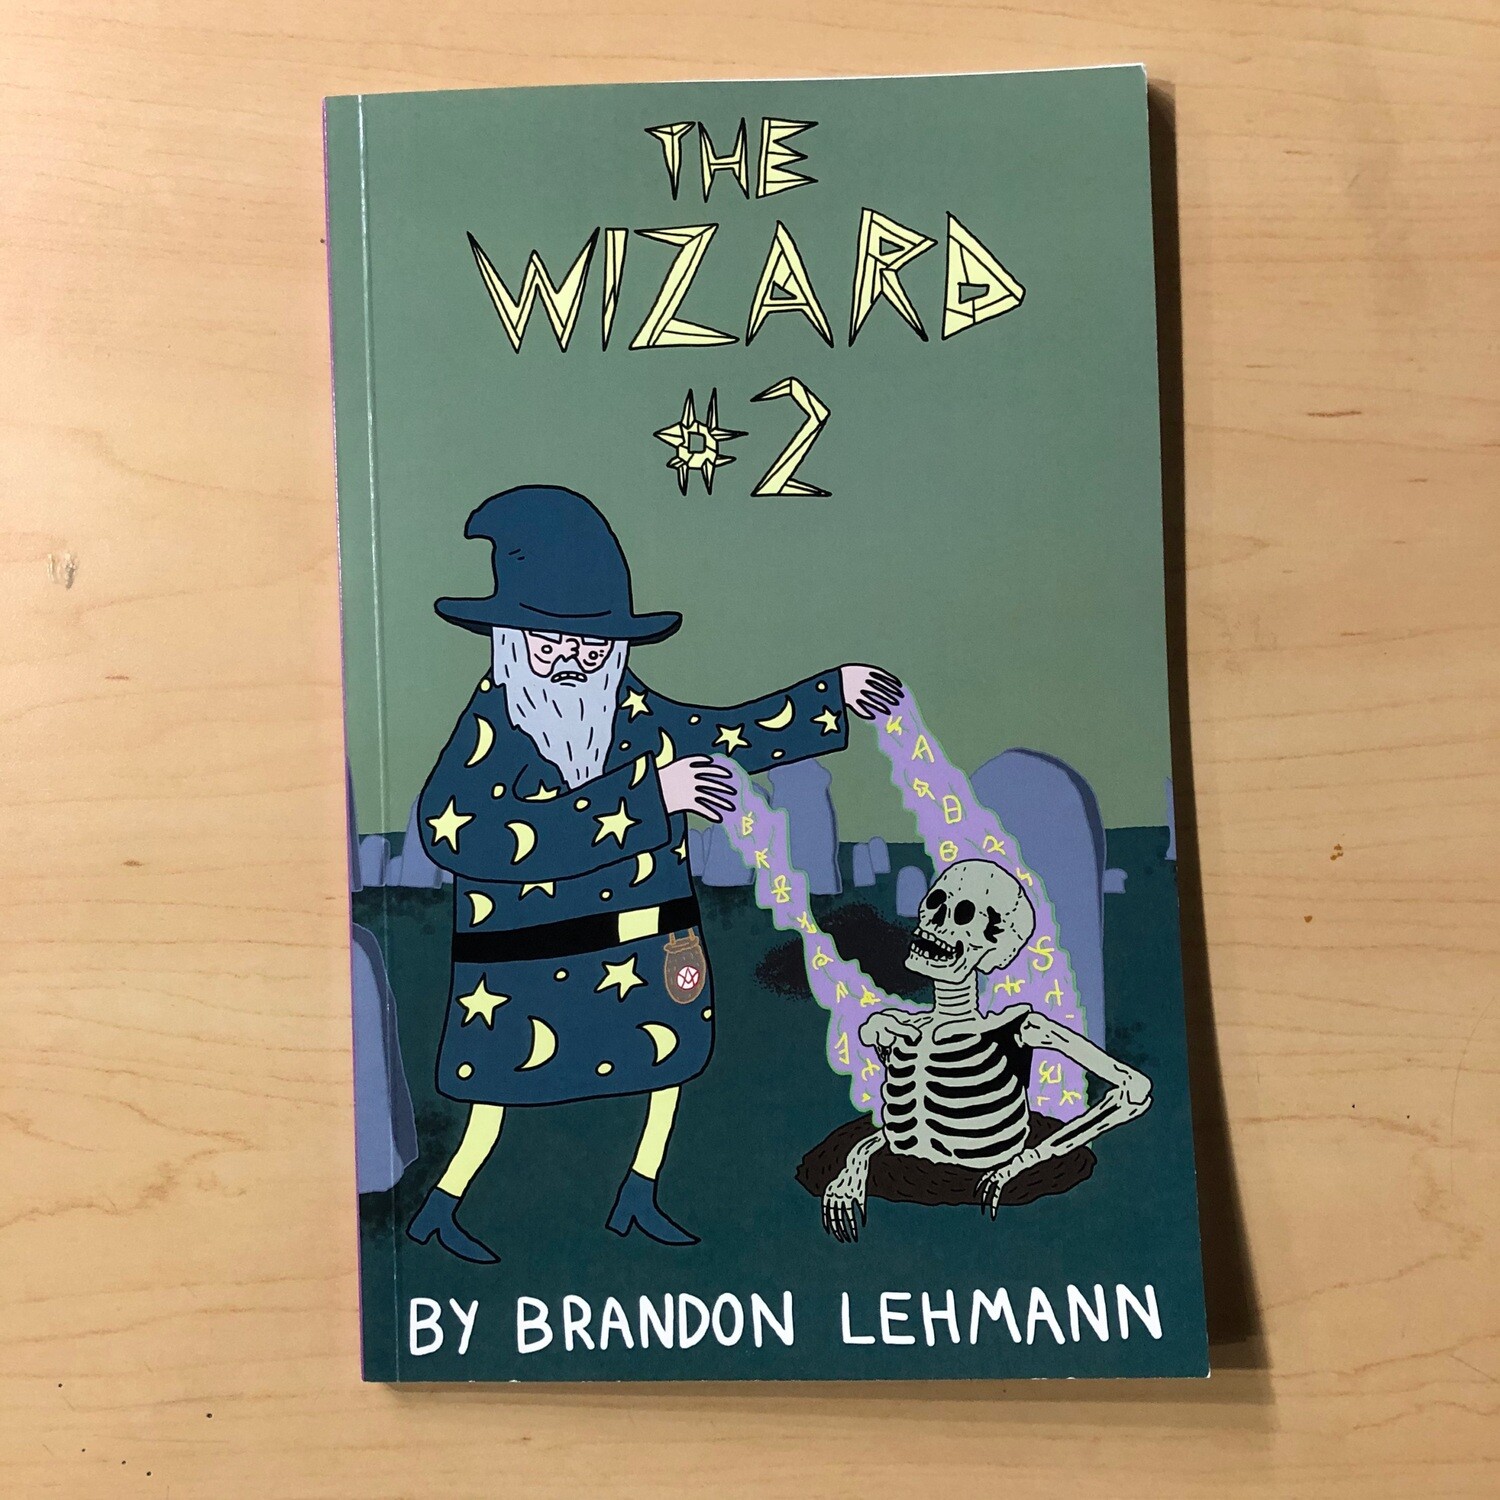 The Wizard #2 - Book by Brandon Lehmann